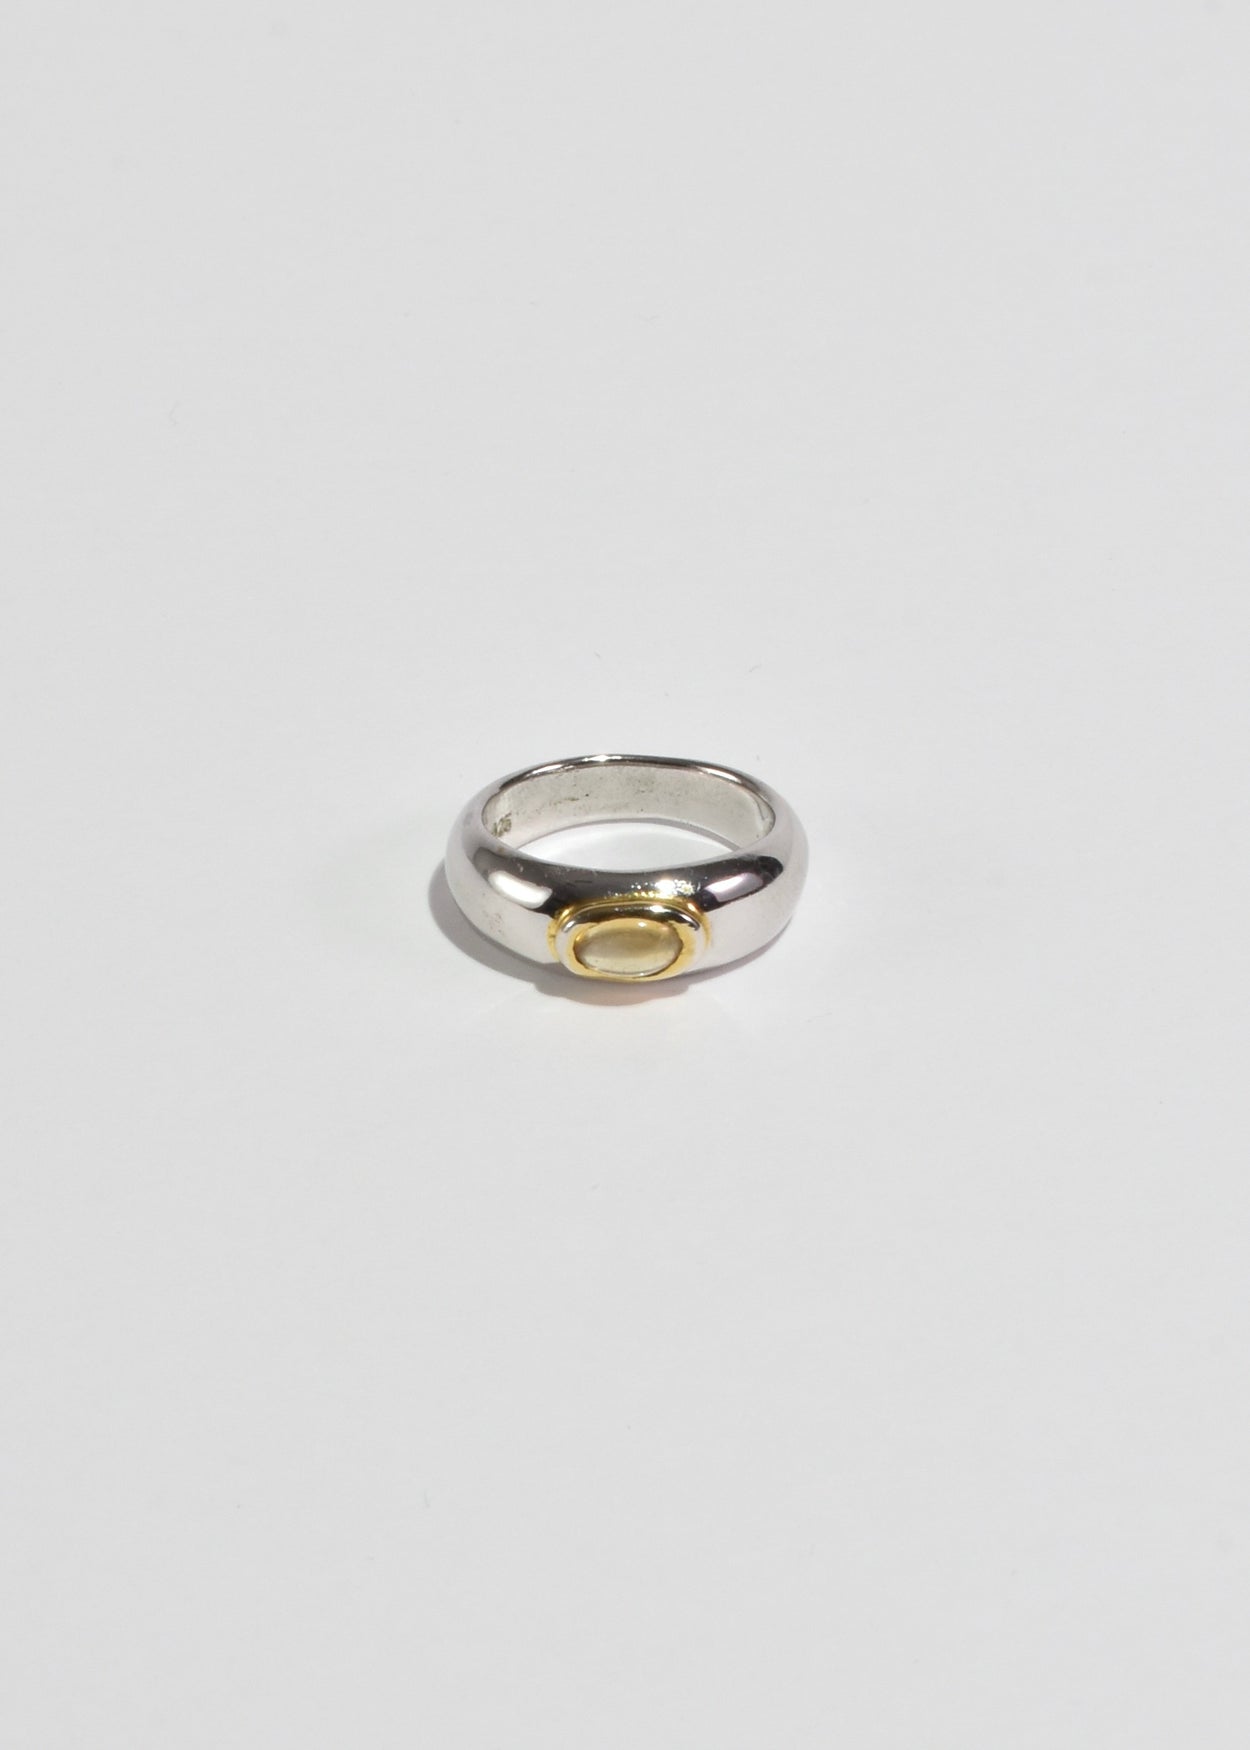 Silver Citrine Ring